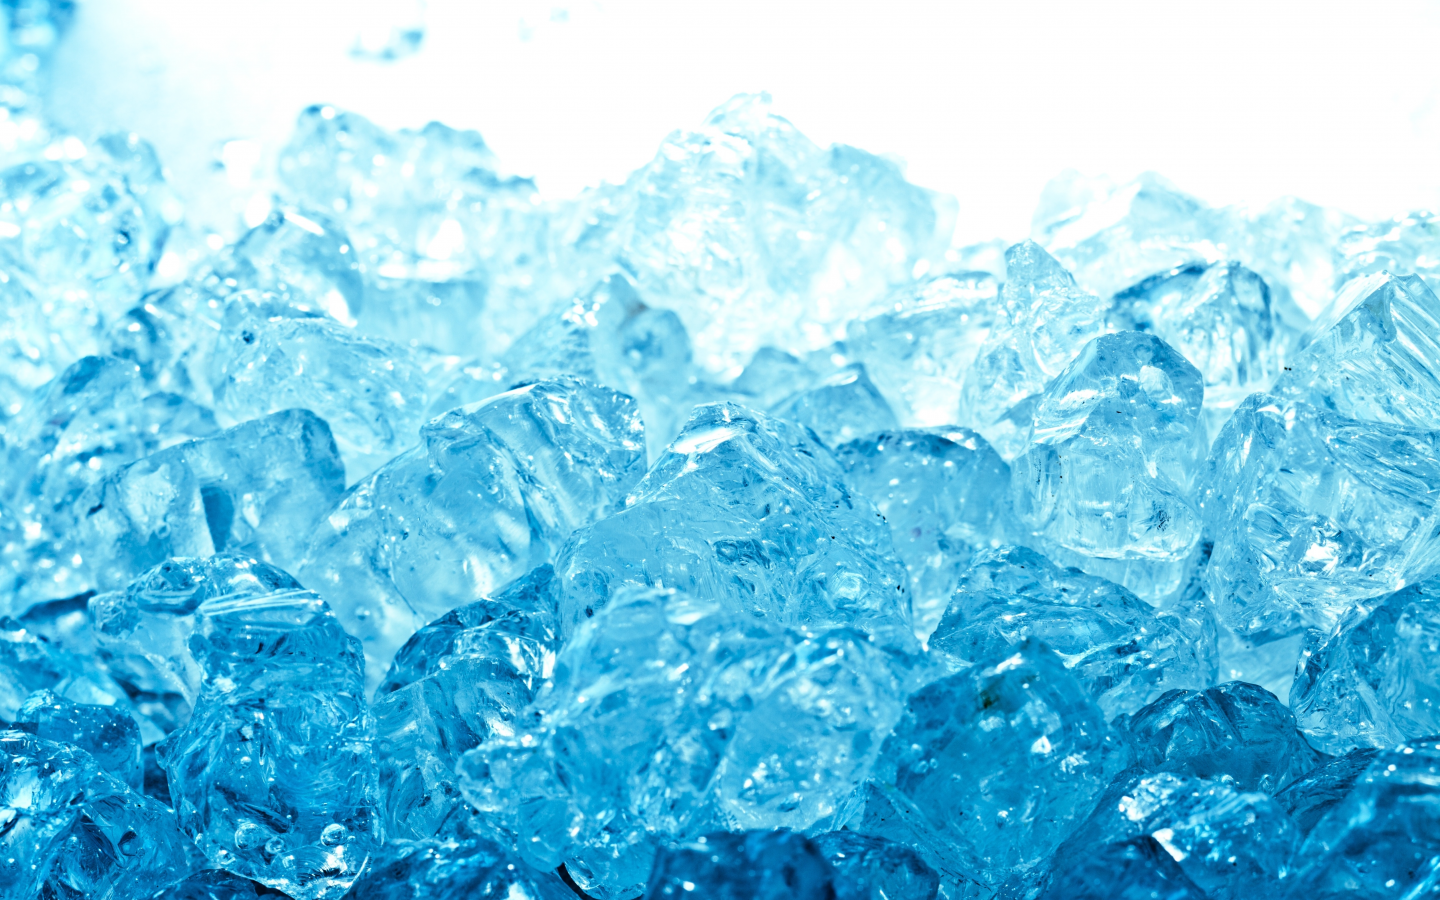 кубики, лед, голубой, синий, вода, макро